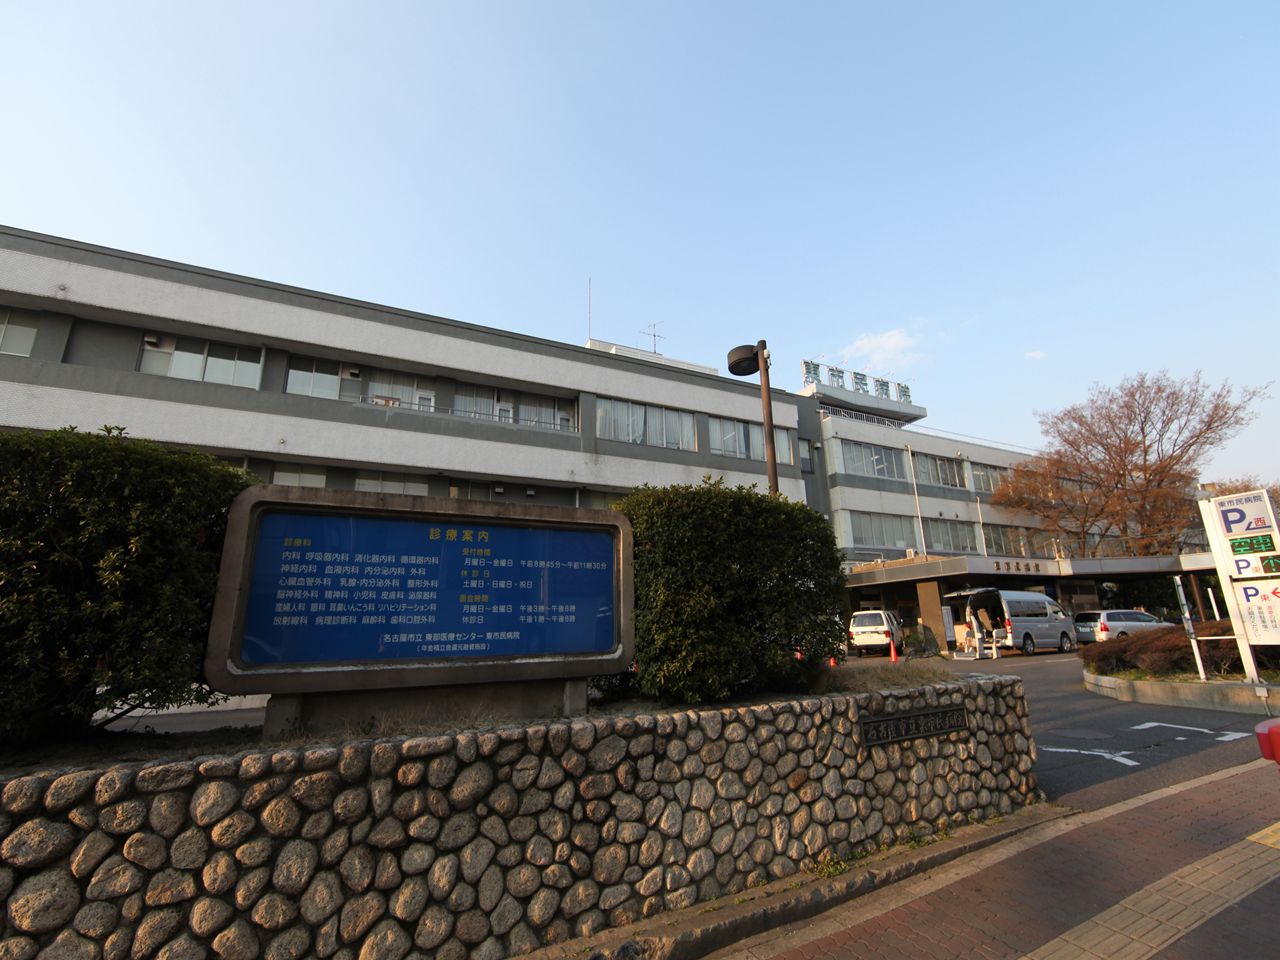 Hospital. 1000m to Nagoya Municipal Eastern Medical Center (hospital)